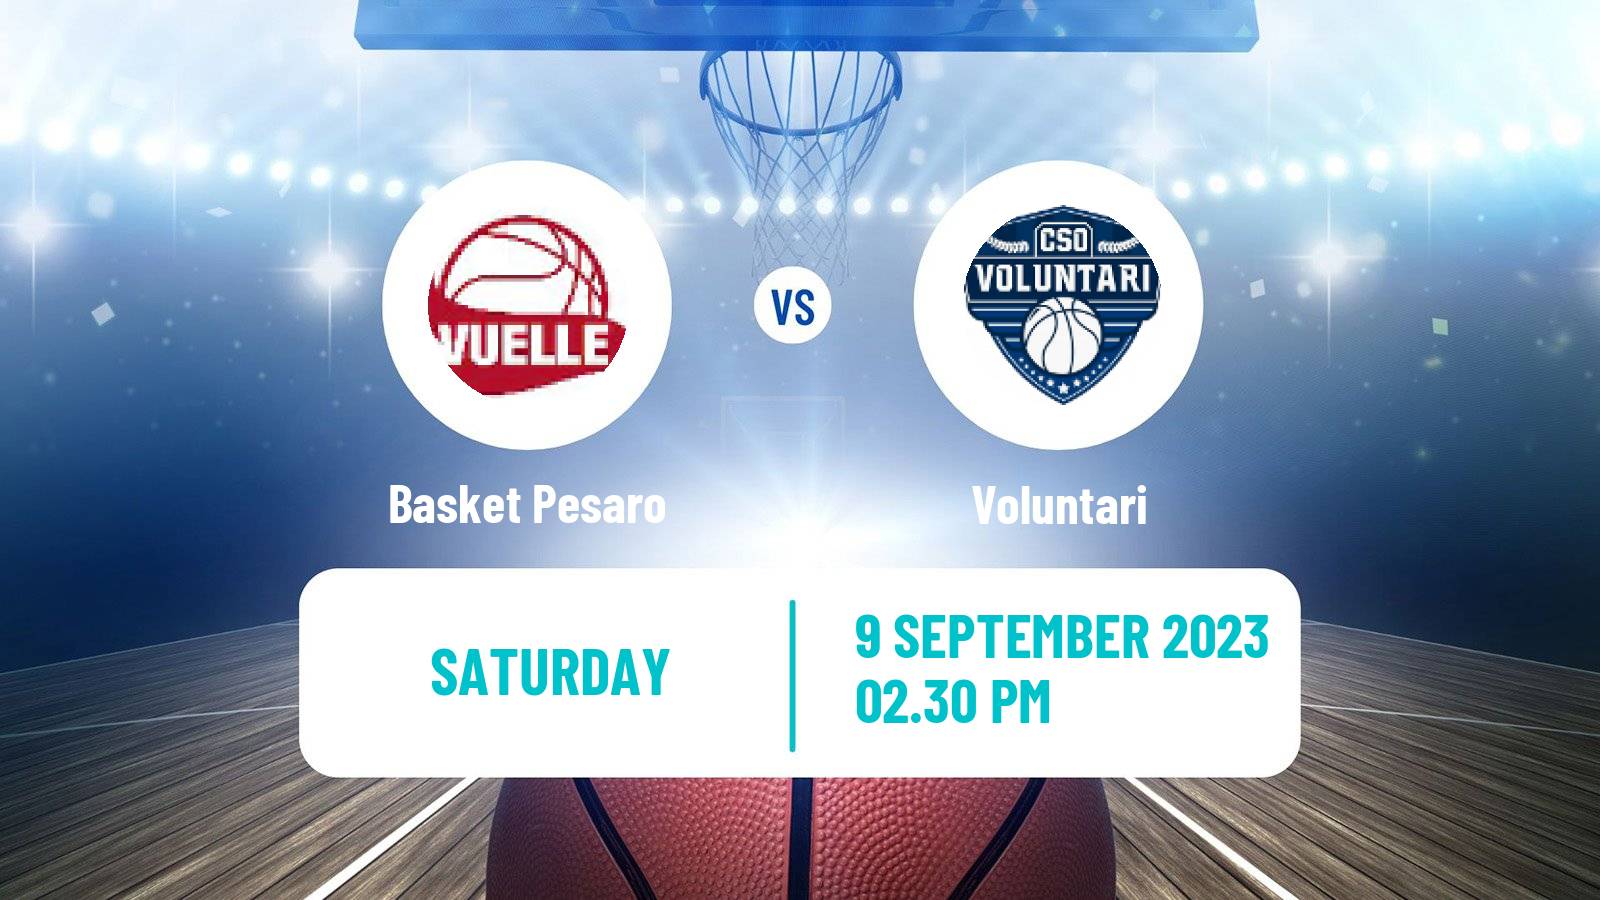 Basketball Club Friendly Basketball Basket Pesaro - Voluntari